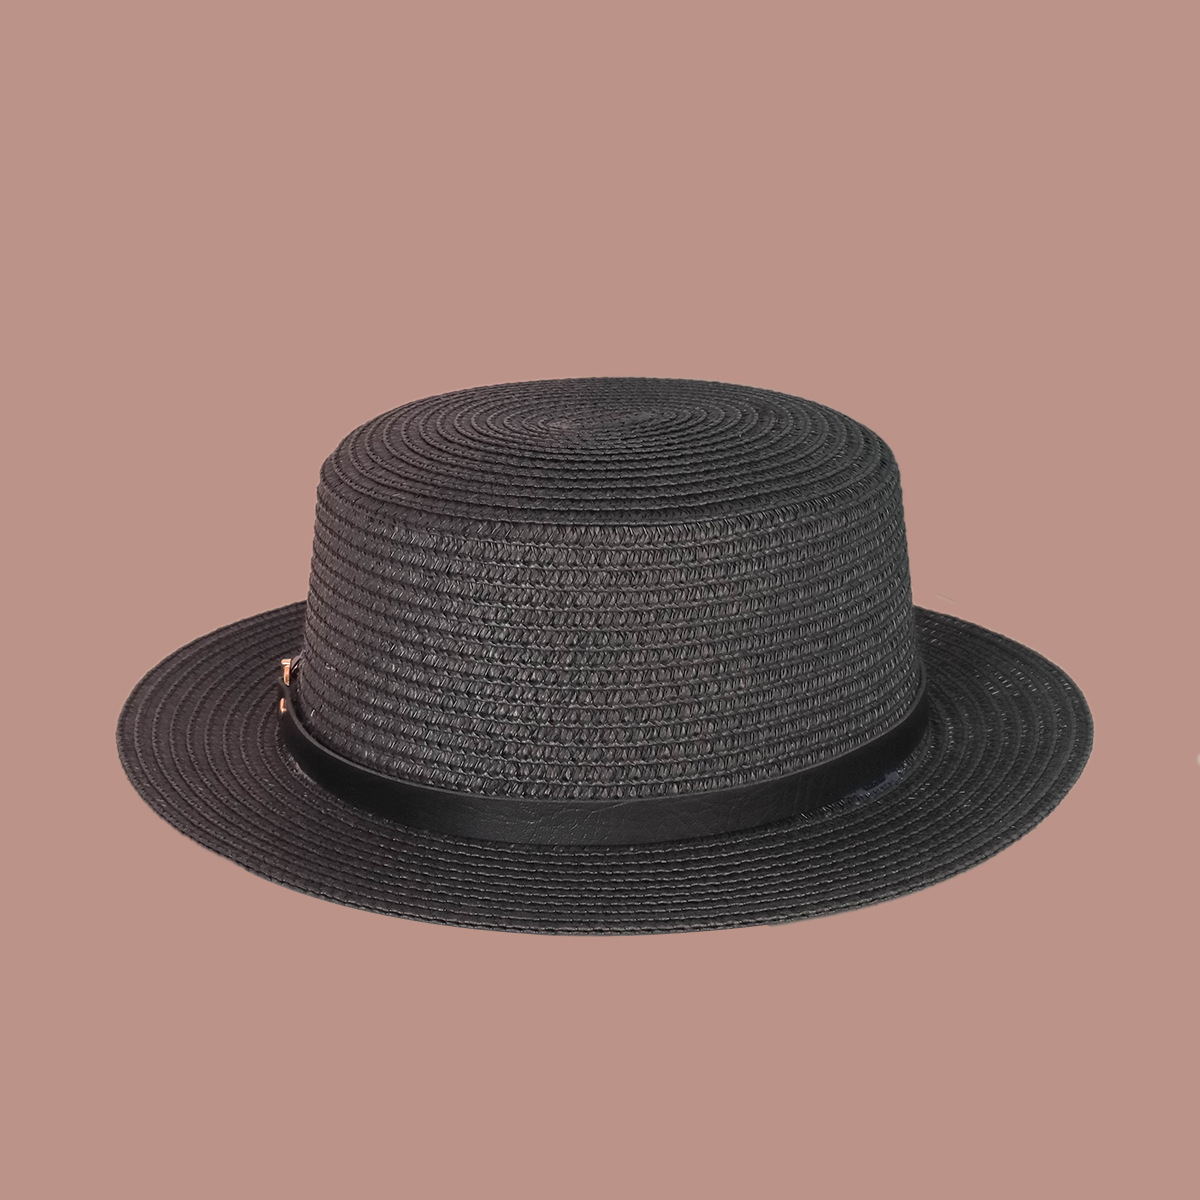 Retro black sunshade wide brim flattop straw hatpicture10